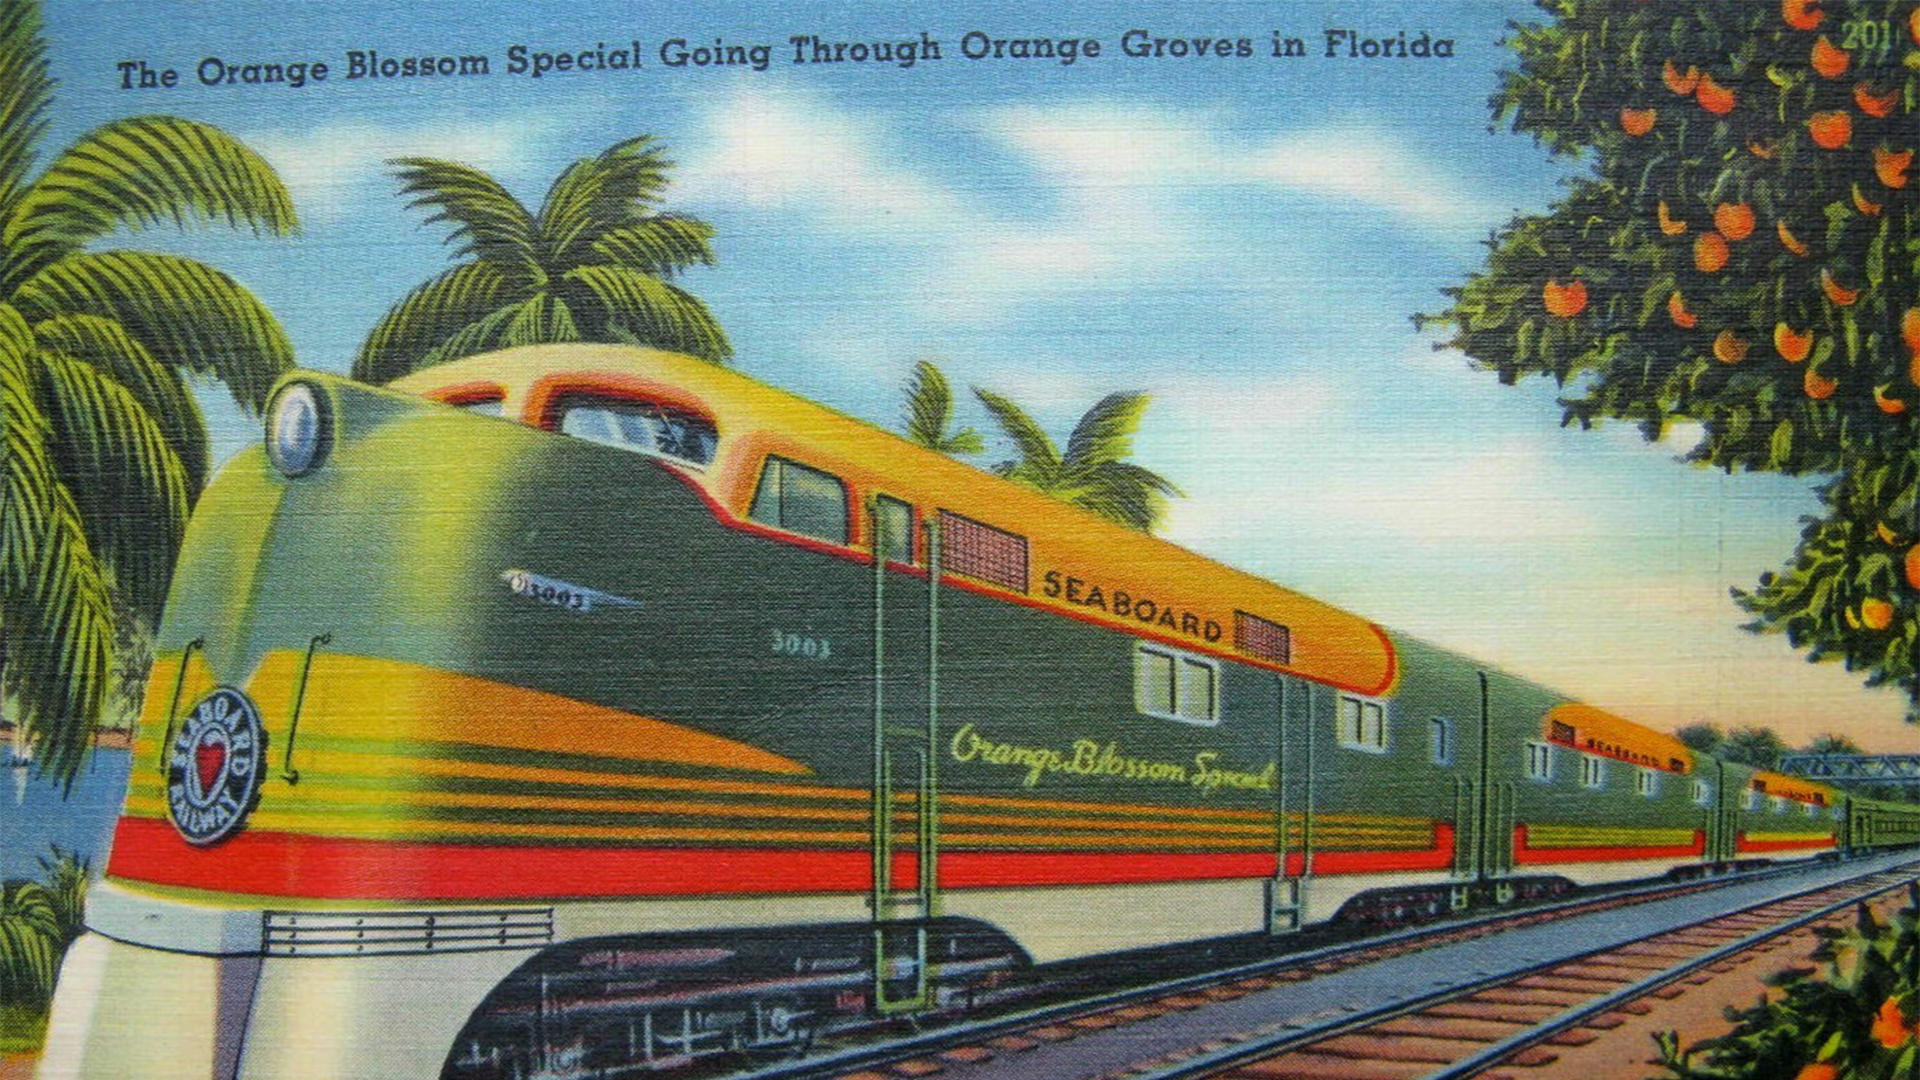 Postcard of train in Florida